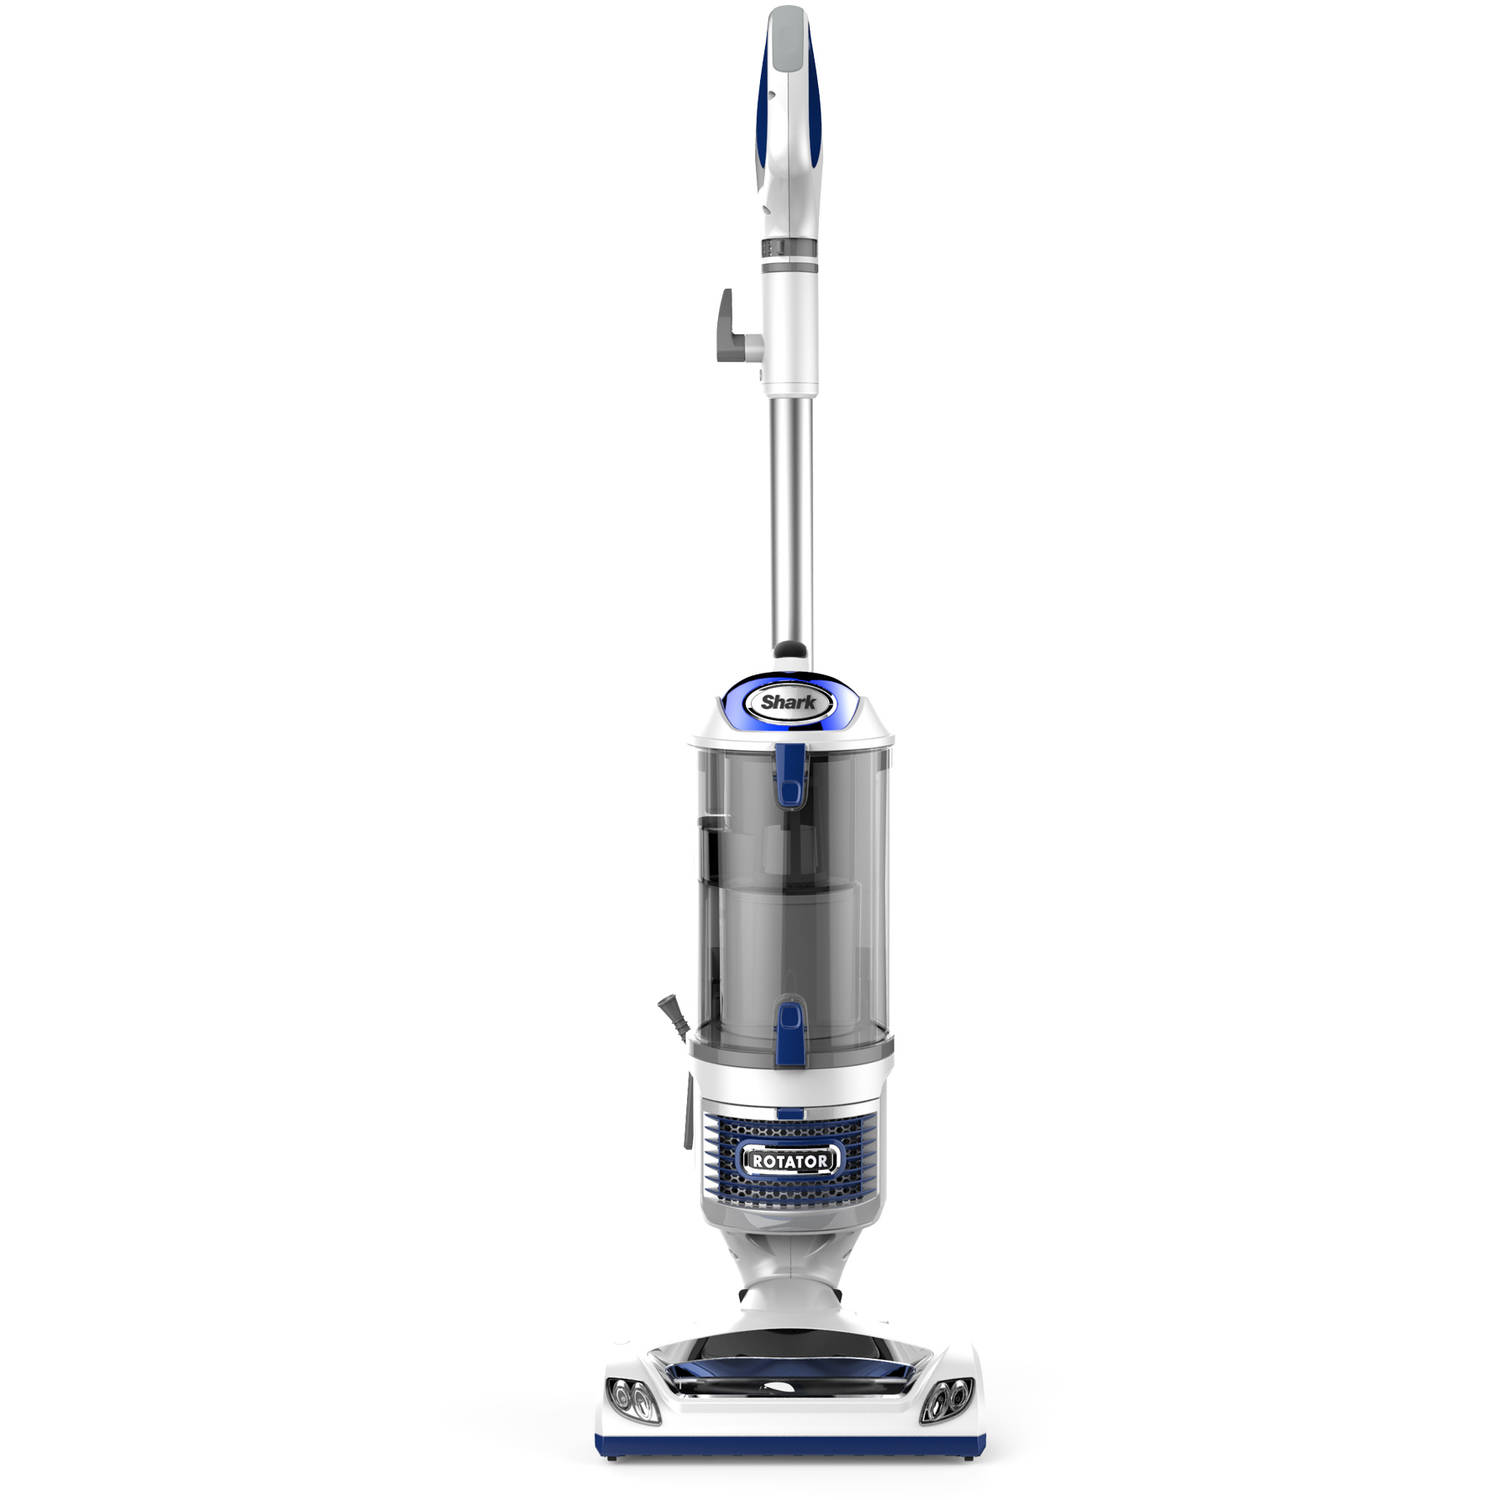 Shark Rotator Professional Lift-Away Upright Vacuum, NV500 - image 1 of 6